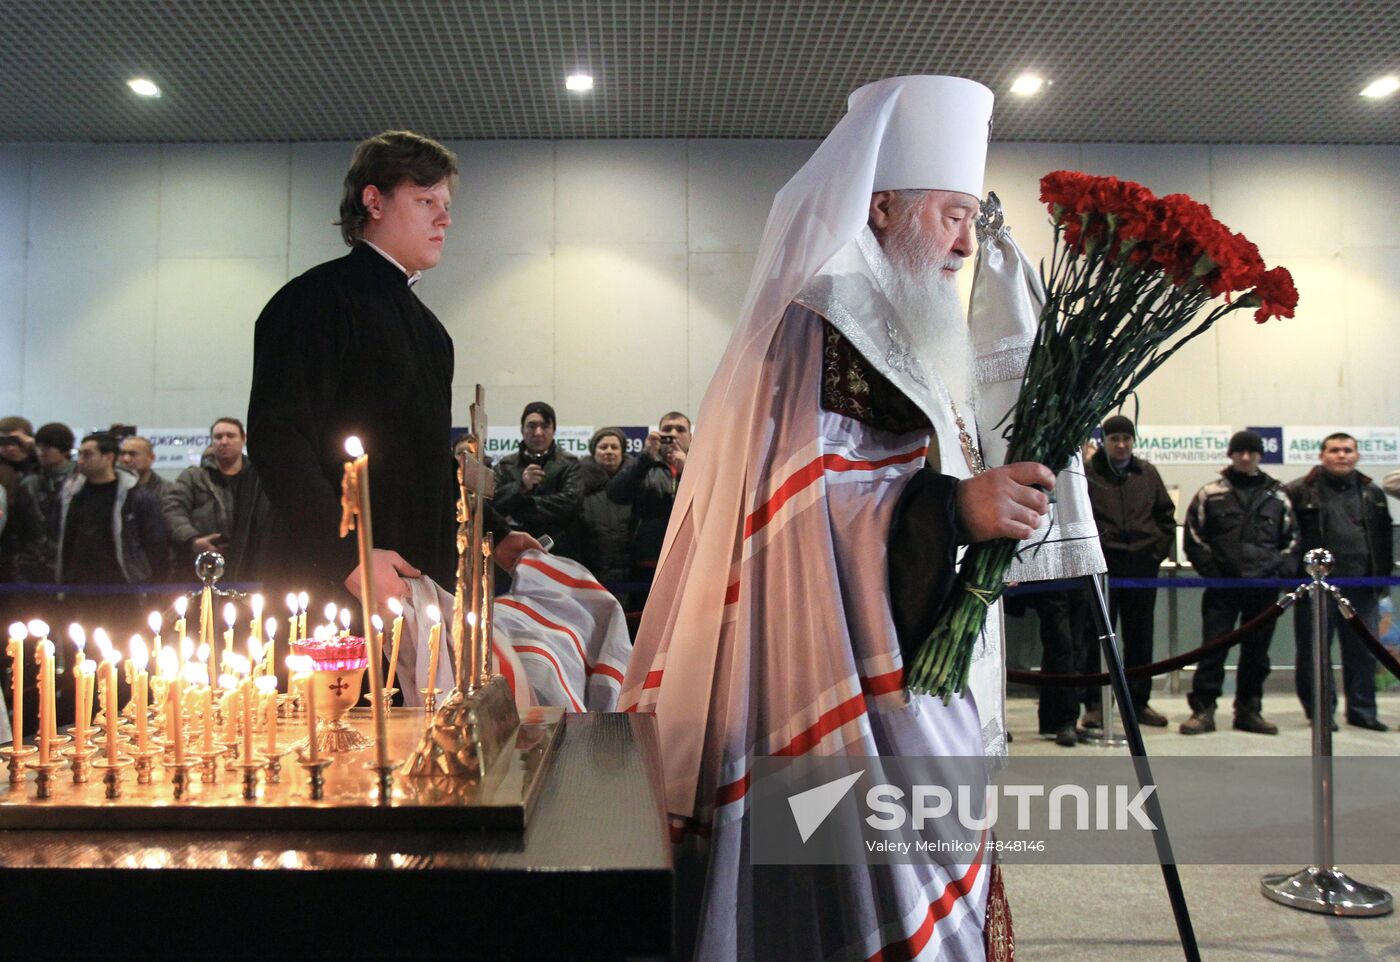 Memorial service for Domodedovo blast victims